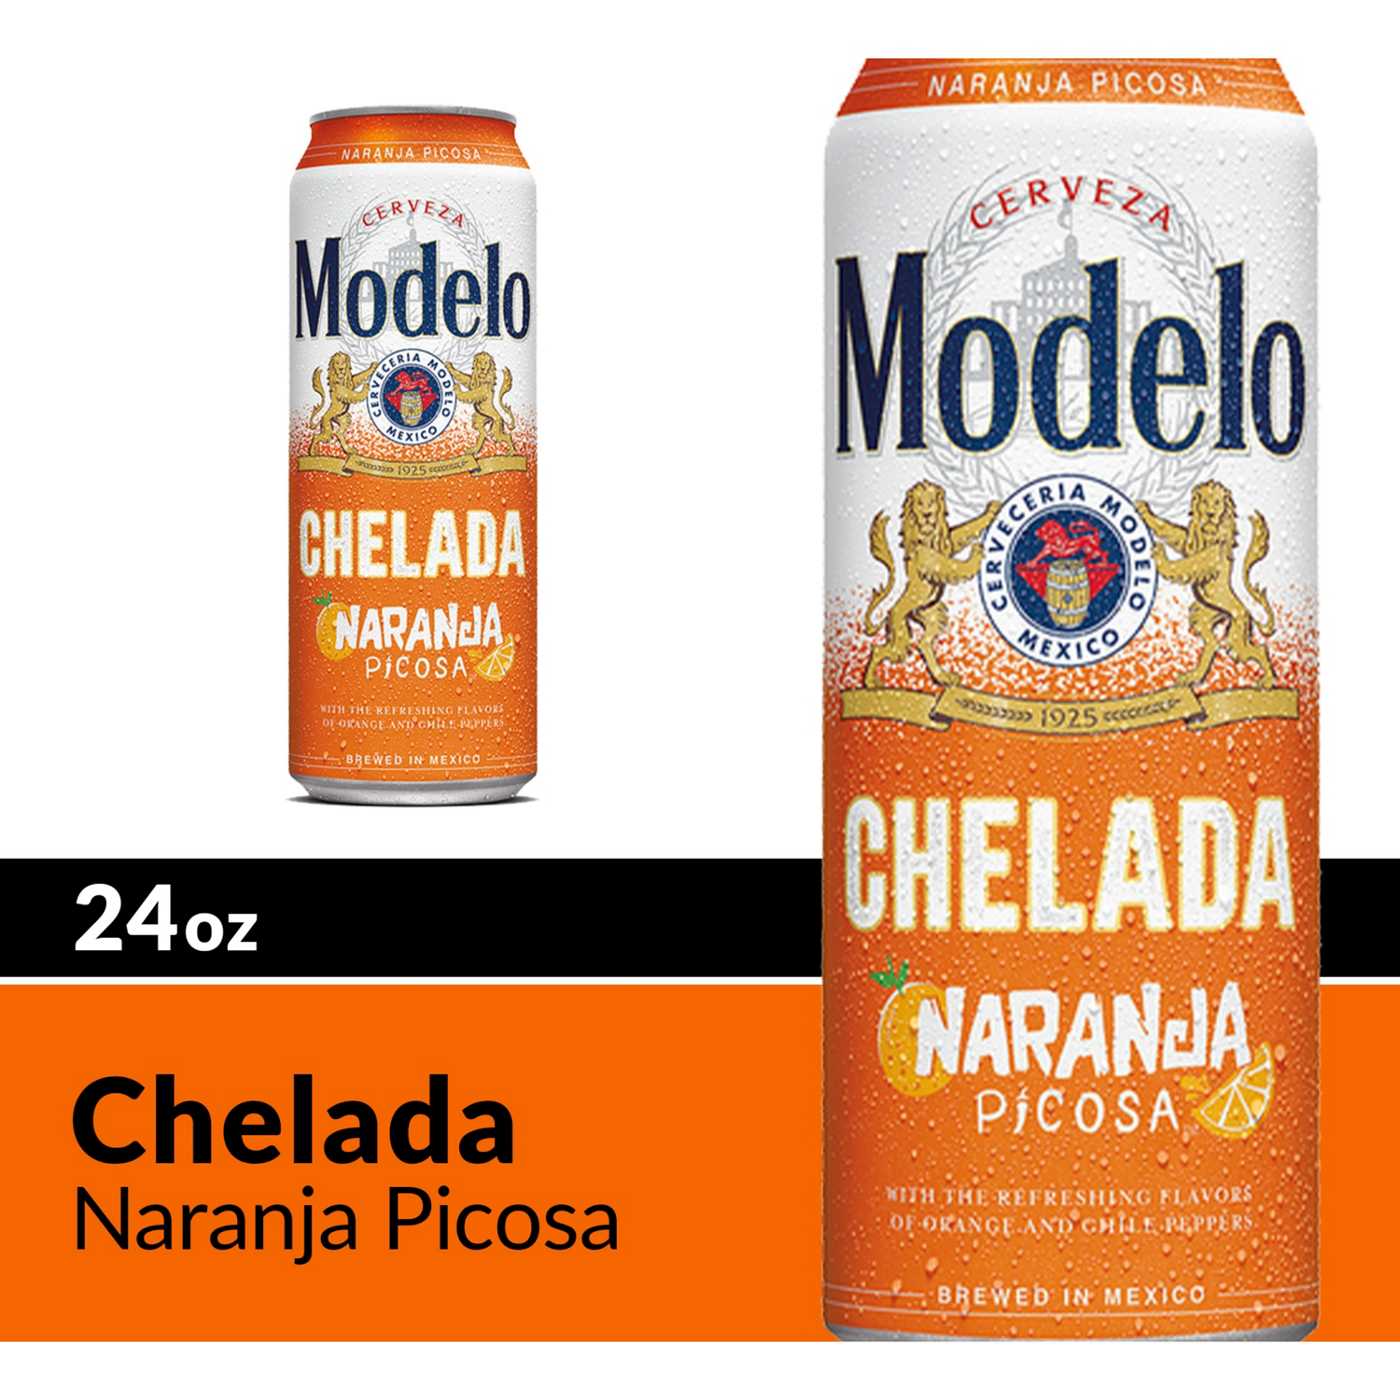 Modelo Chelada Naranja Picosa Mexican Import Flavored Beer 24 oz Can; image 7 of 8